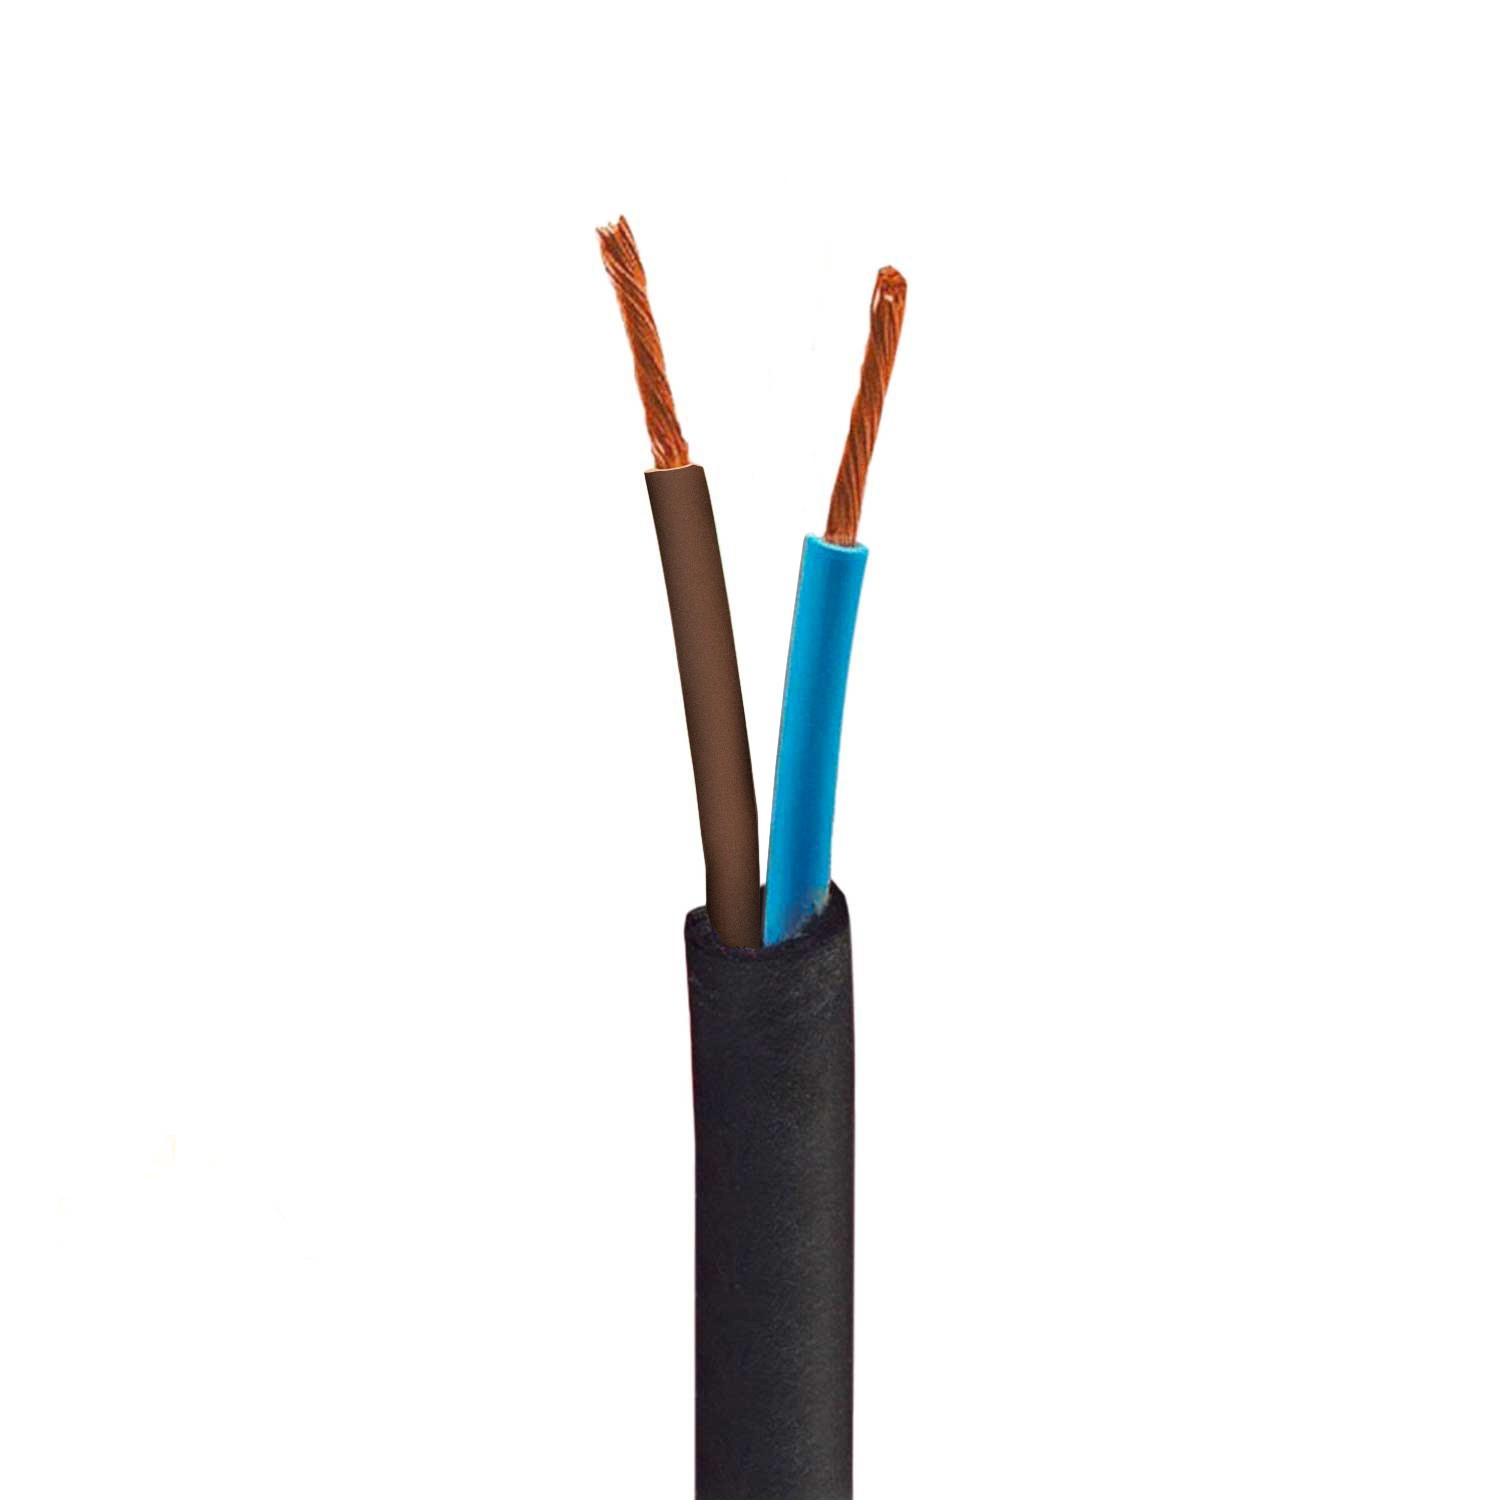 UV otporan okrugli električni kabel opleten crvenom tkaninom SM09, za vanjsku upotrebu - kompatibilan s Eiva Outdoor IP65